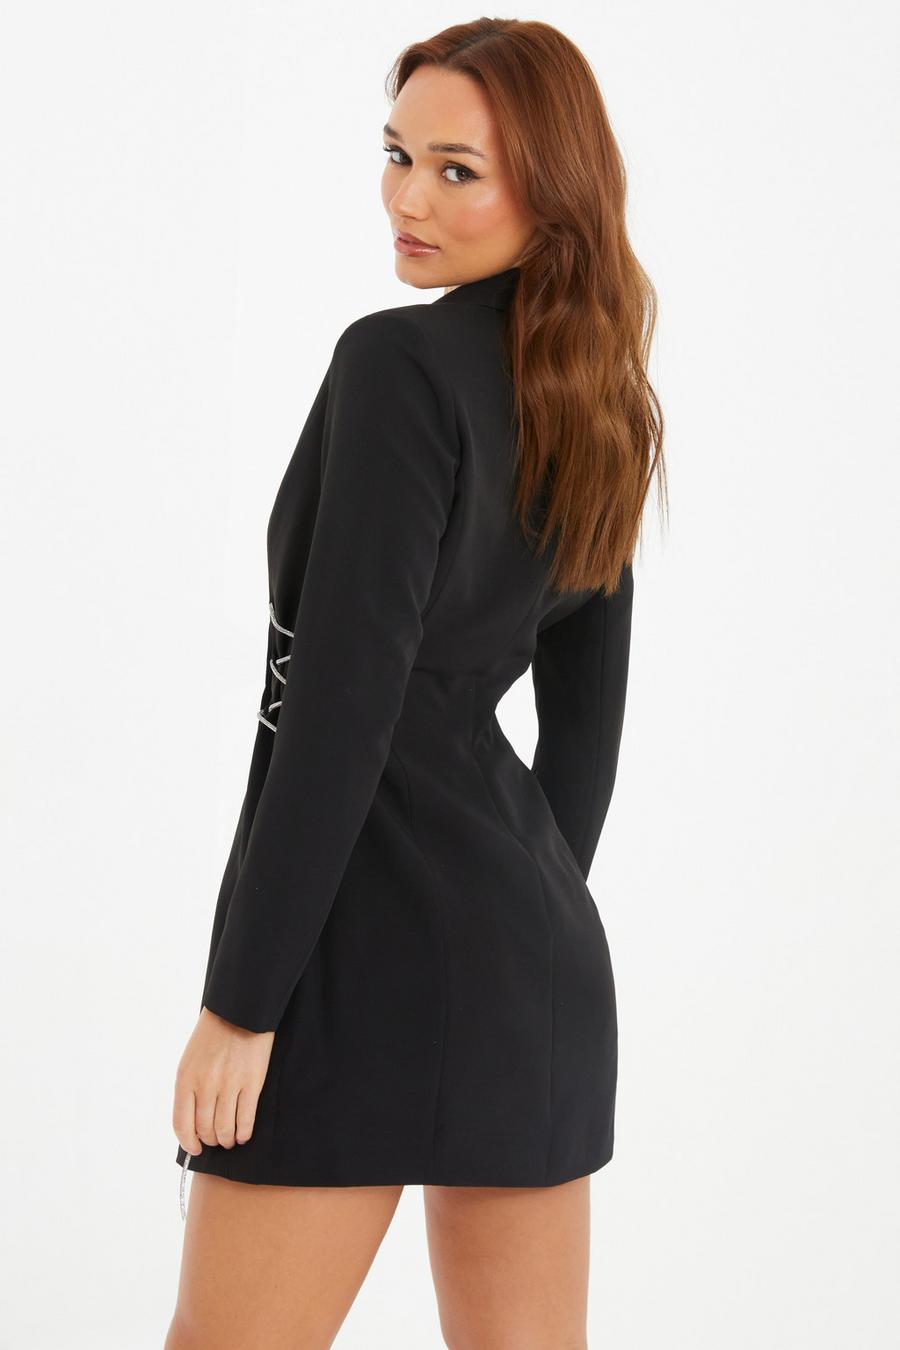 Black Lace Up Blazer Dress - Quiz Clothing